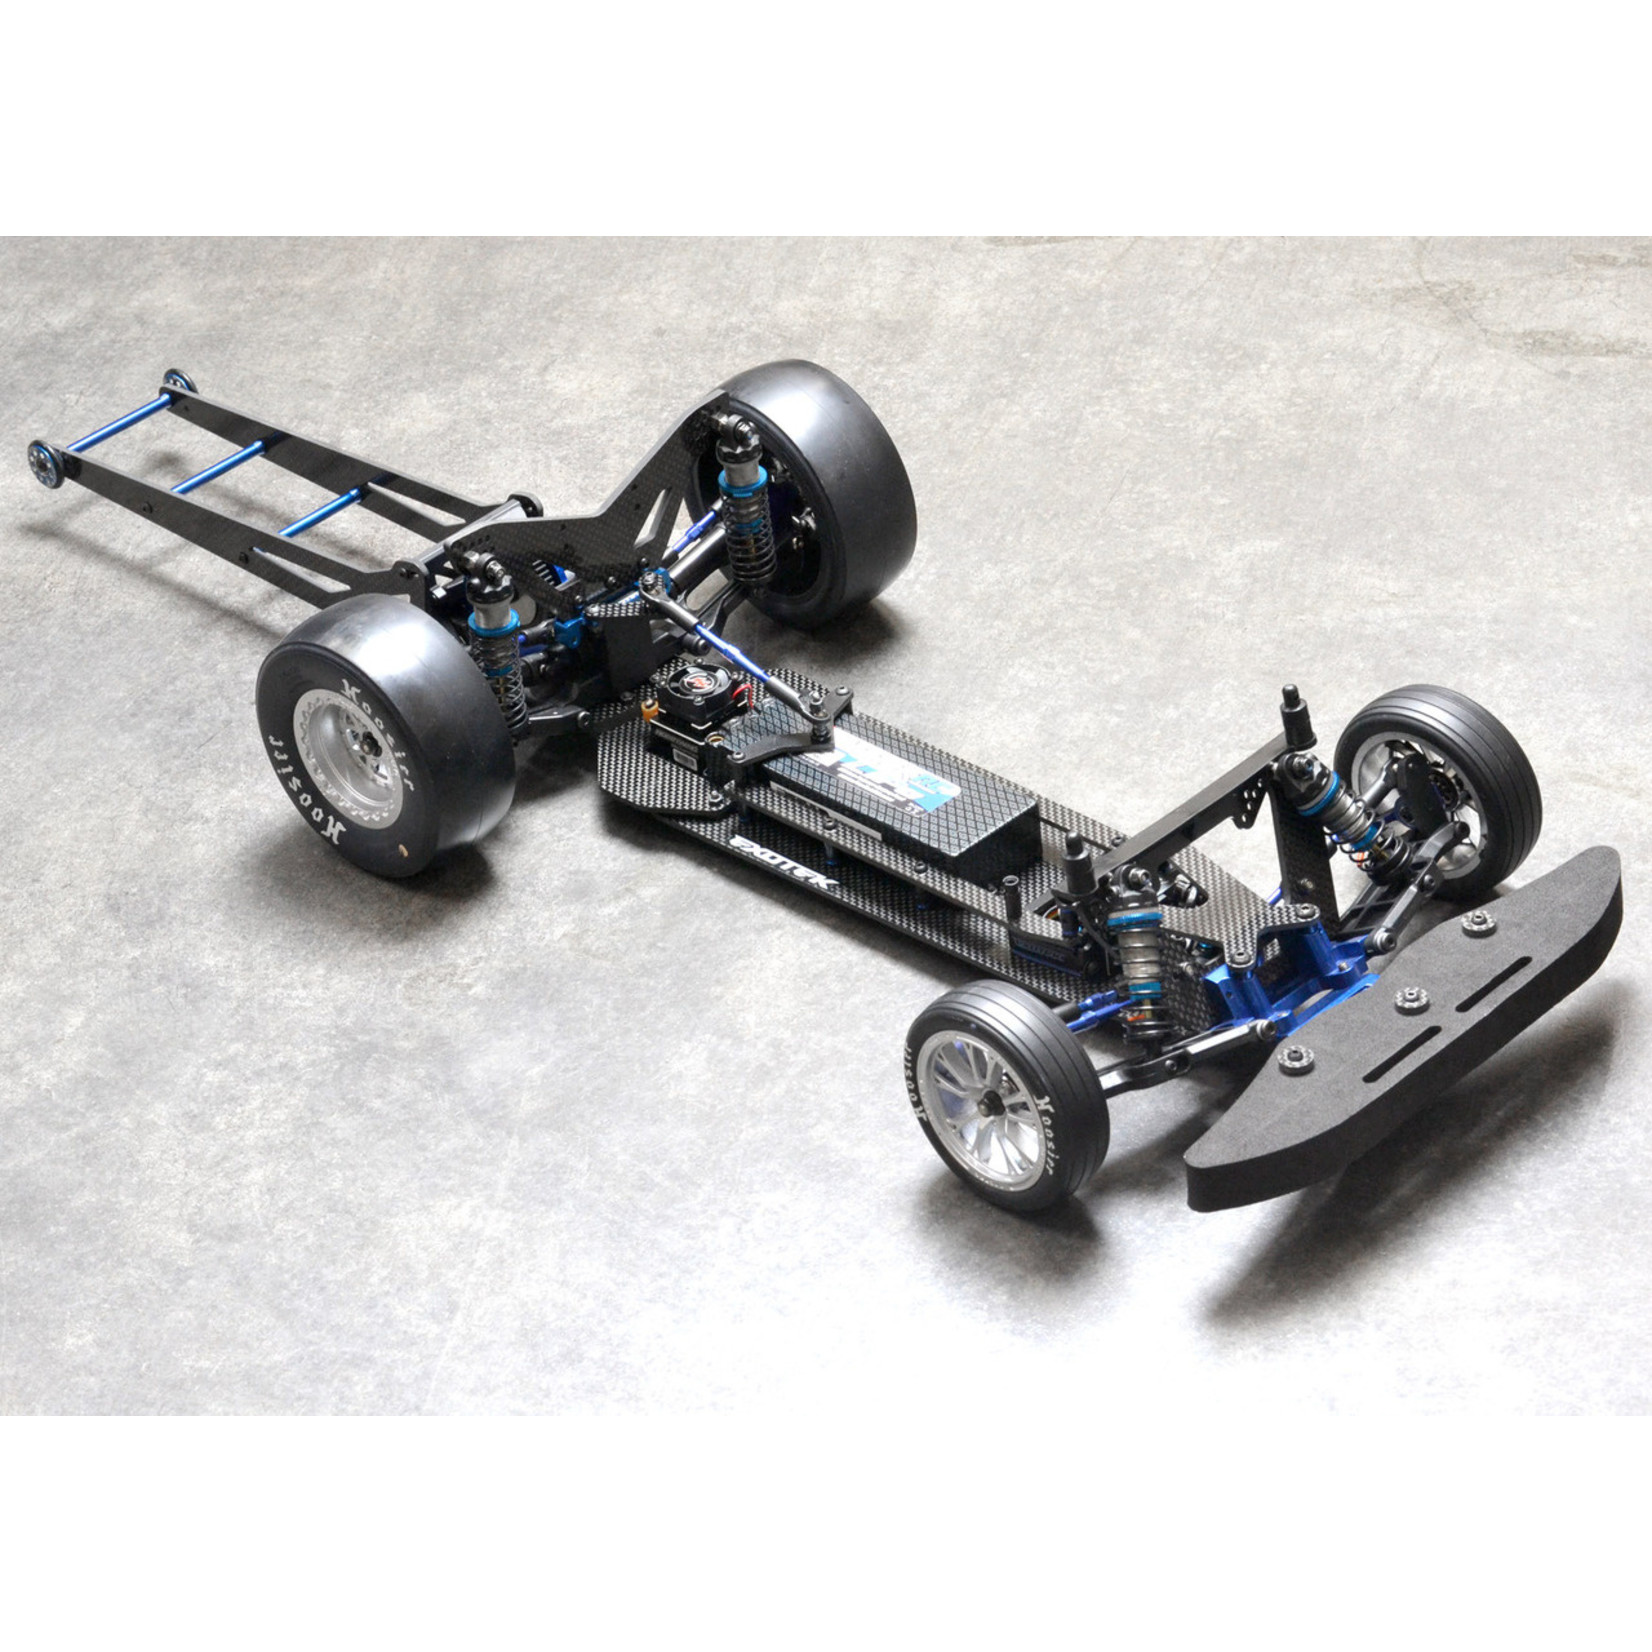 Exotek Racing TX Vader Drag Chassis Conversion, for the 2wd Slash